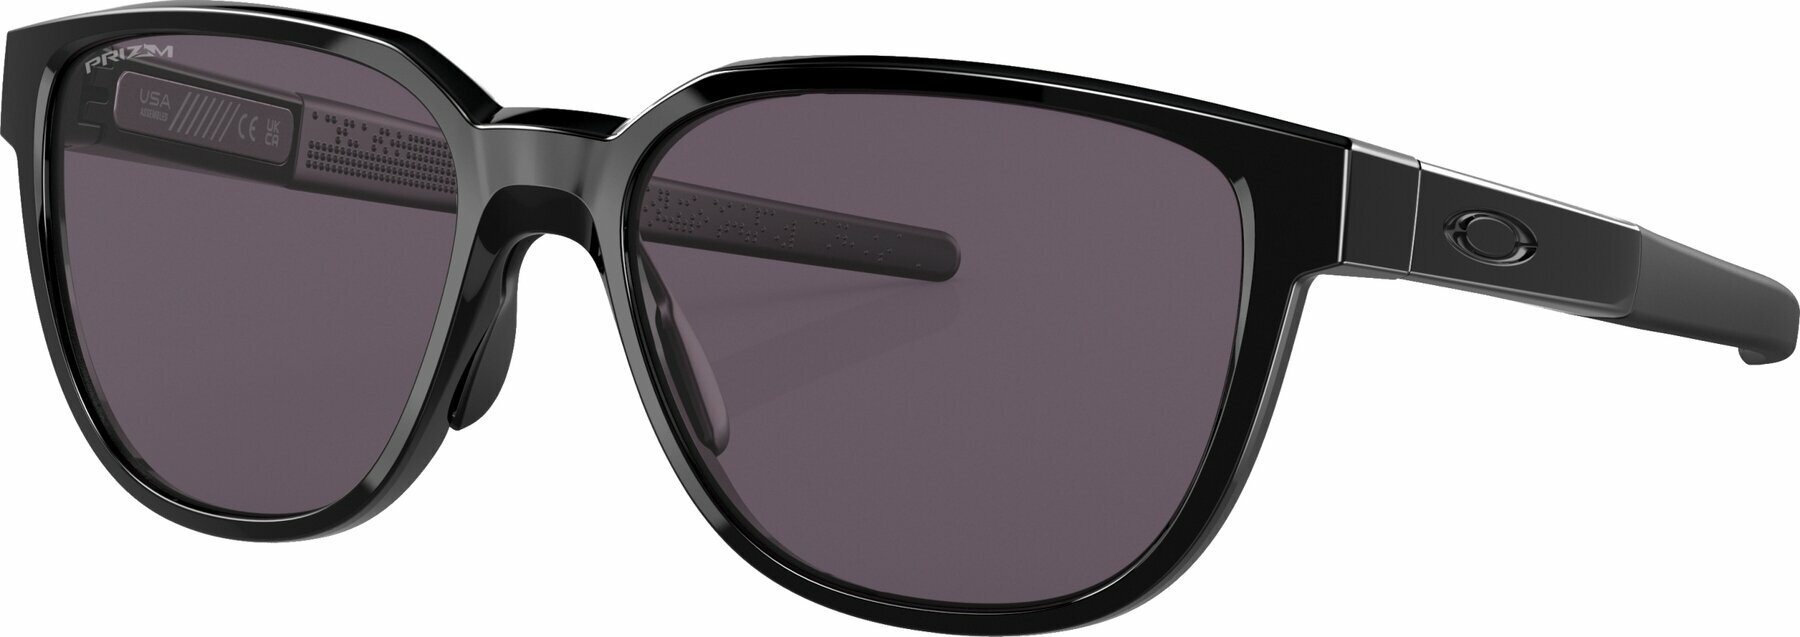 Lifestyle Glasses Oakley Actuator 92500157 Polished Black/Prizm Grey L Lifestyle Glasses